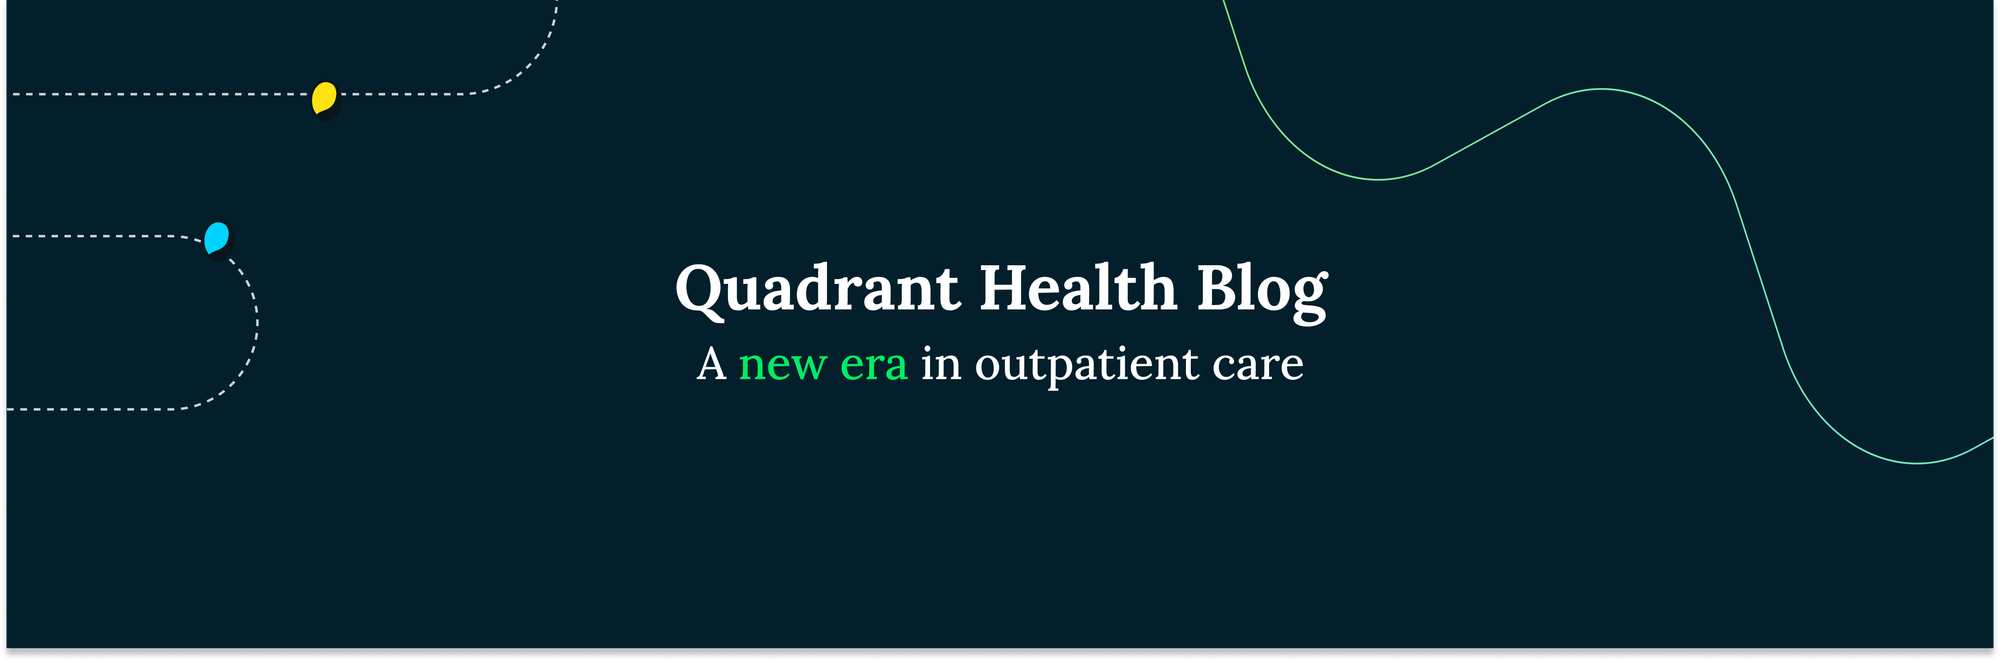 Quadrant Health